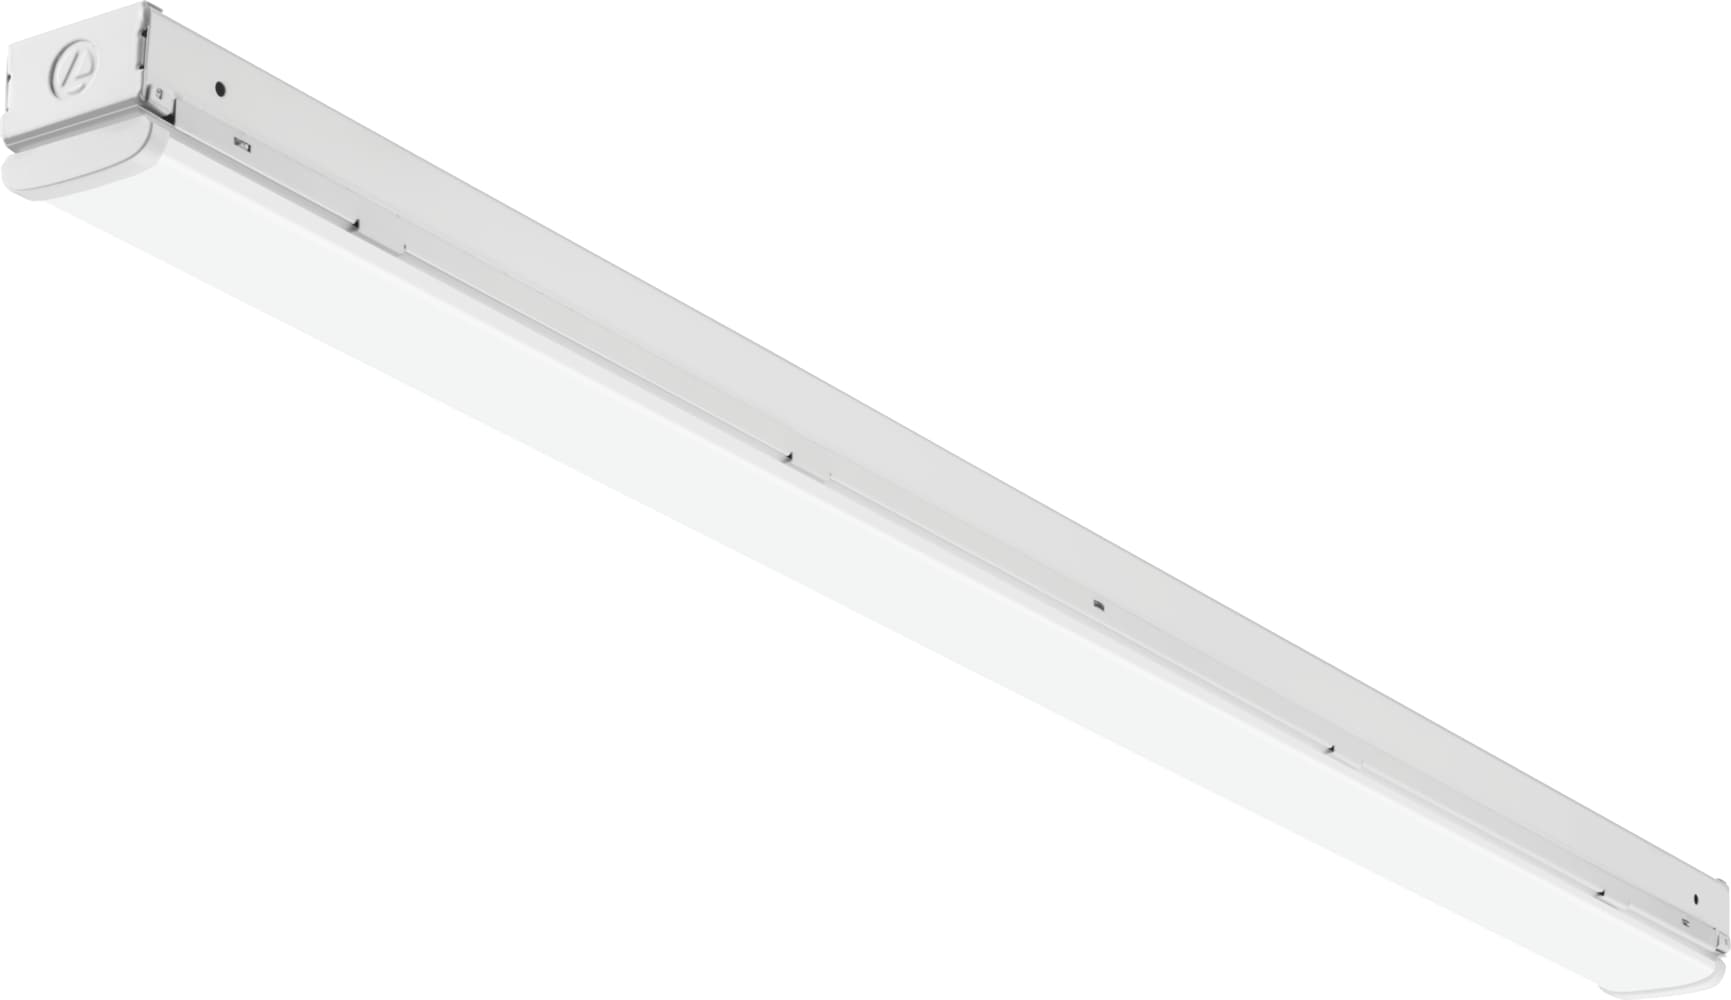 Lithonia Lighting 204ruh Strip Light Fixture 120 V 32 W 1 Lamp for sale online 